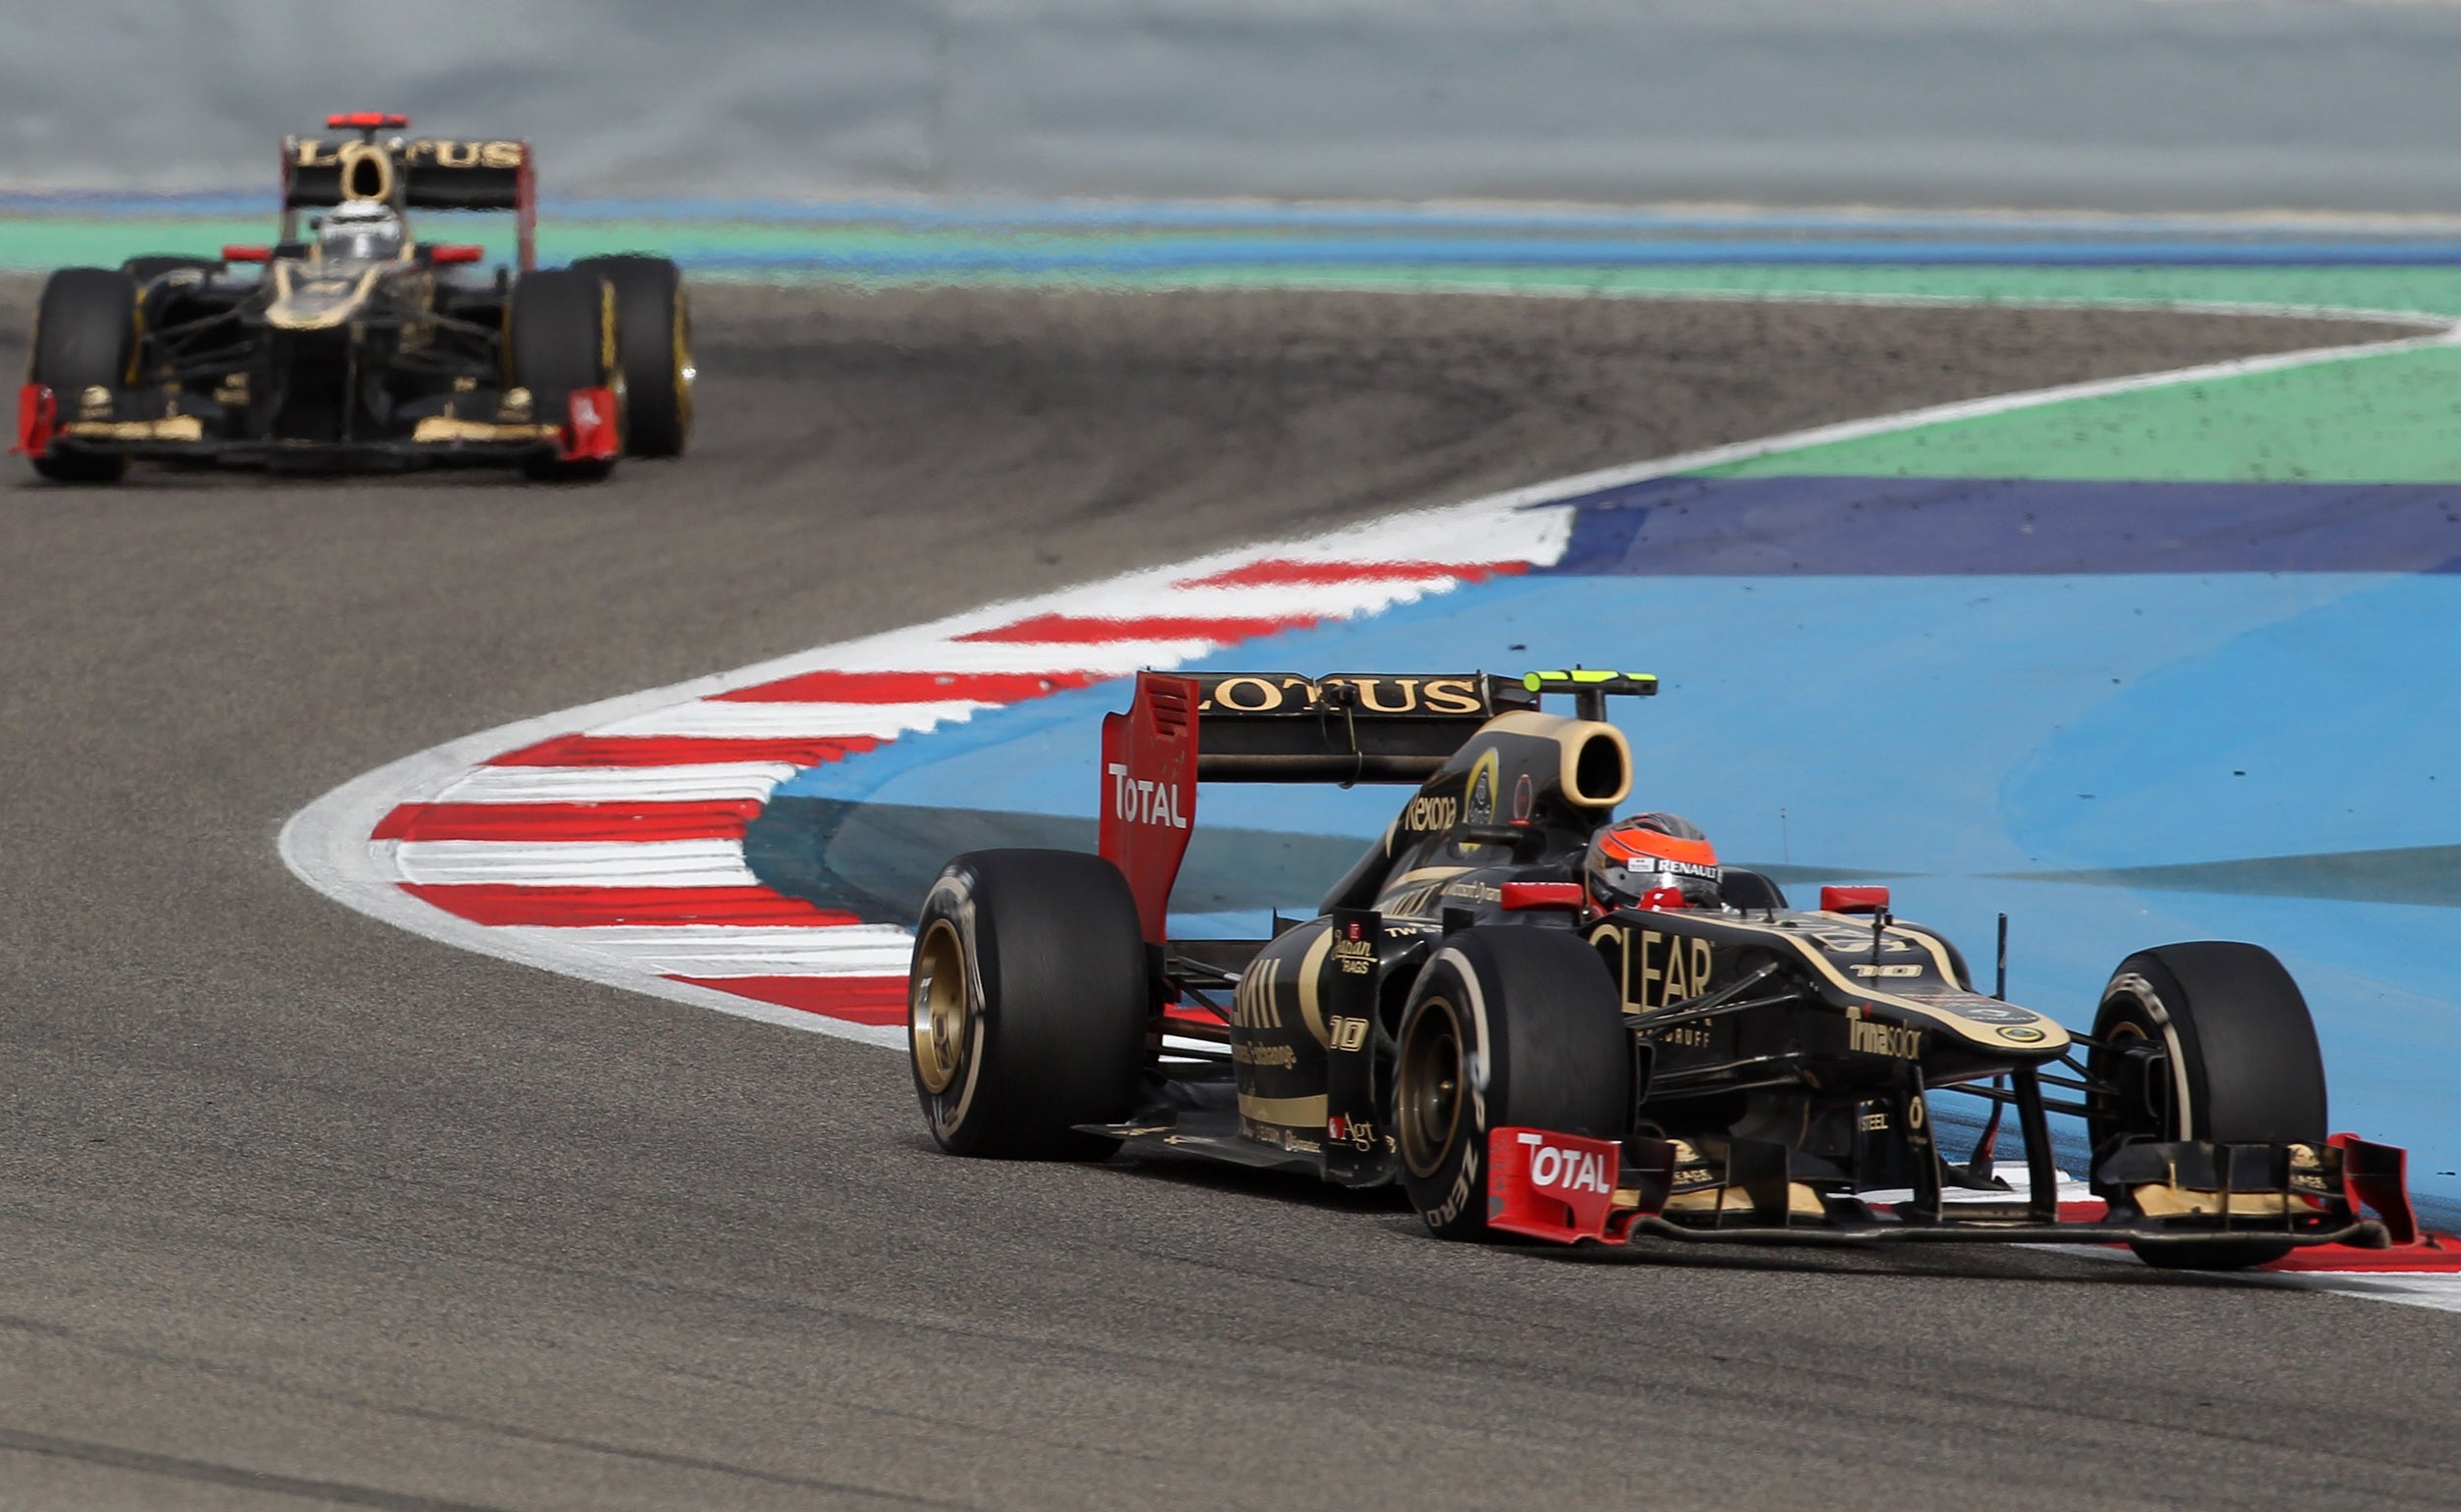 Kimi Raikkonen ahead of his Lotus team-mate Romain Grosjean